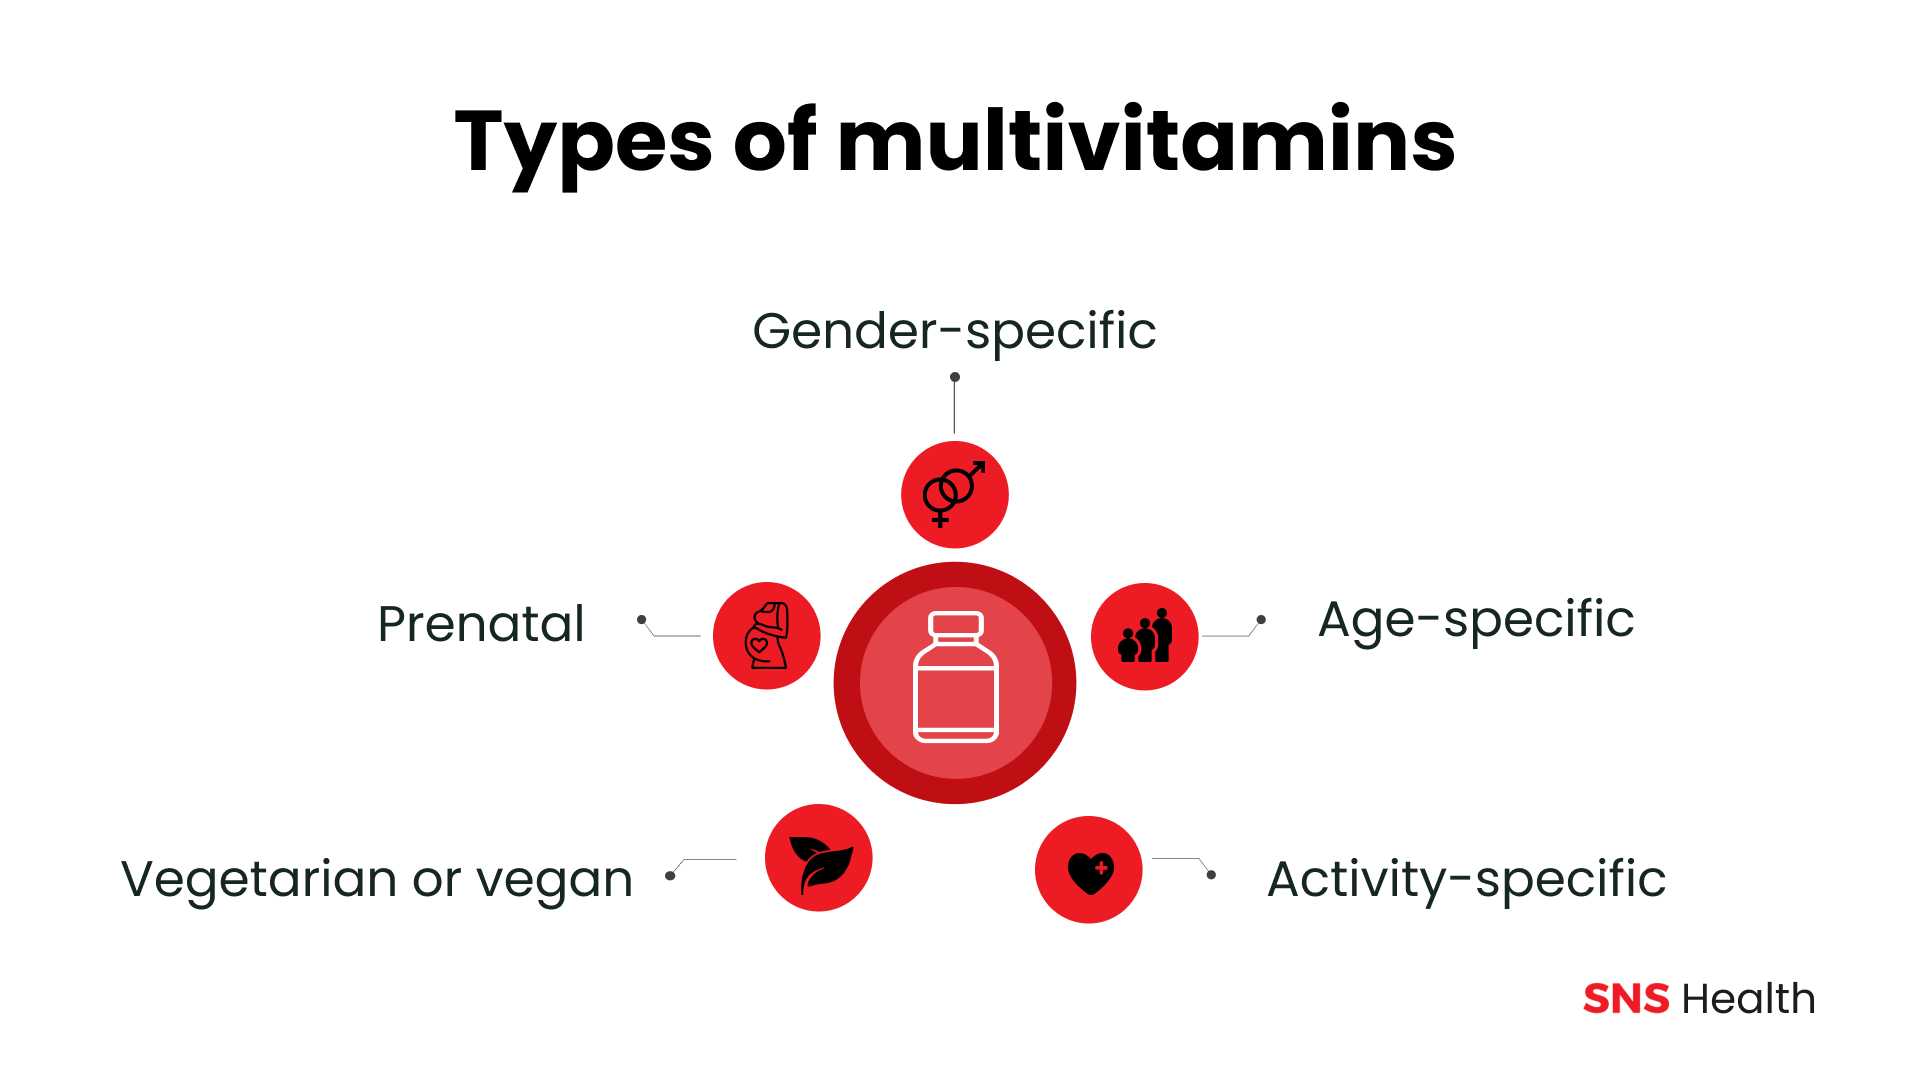 Types of multivitamins